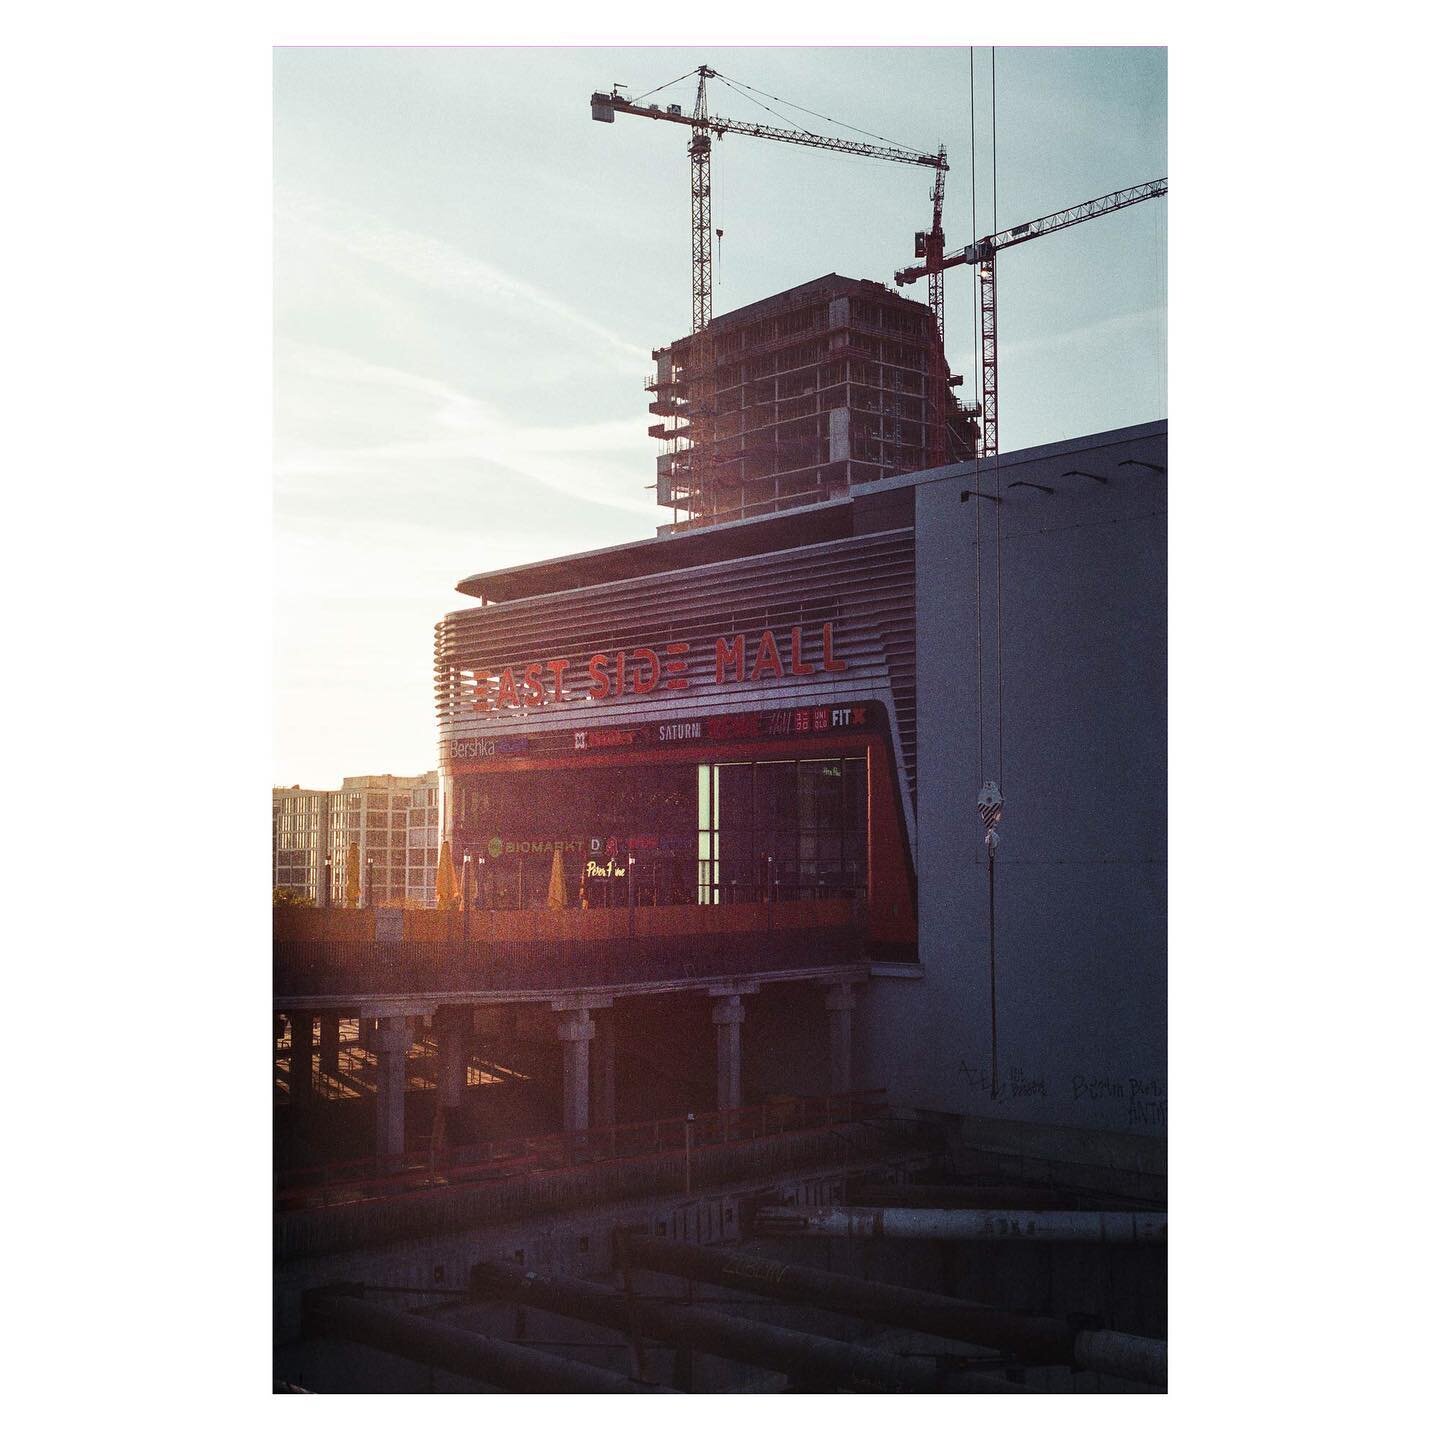 east side mall

#NikonFE #analog #35mm #onfilm #filmphotography #spiegelreflex #analogfotografie #berlin #eastside